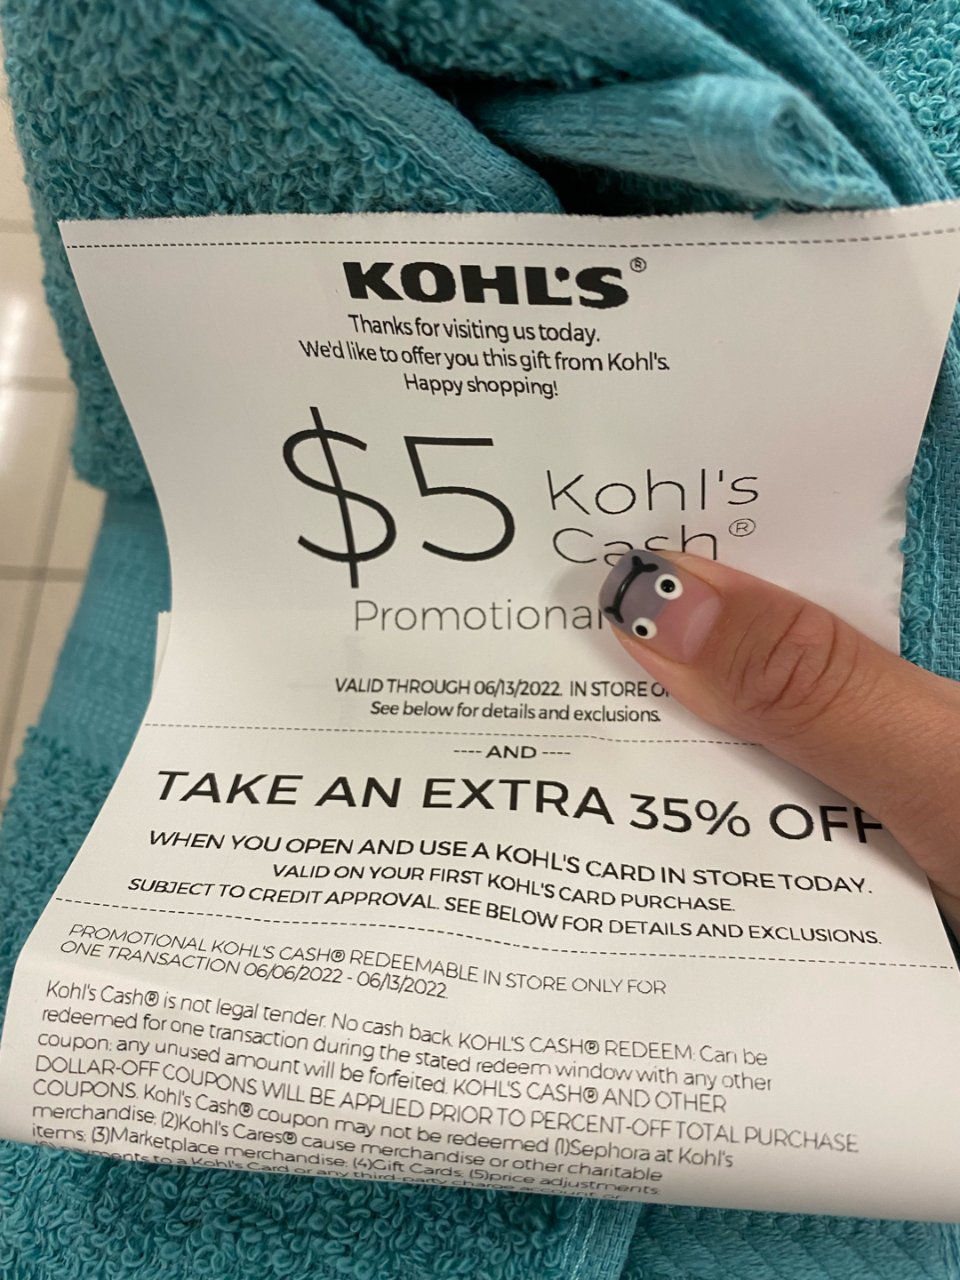 Kohl's 科尔士百货公司